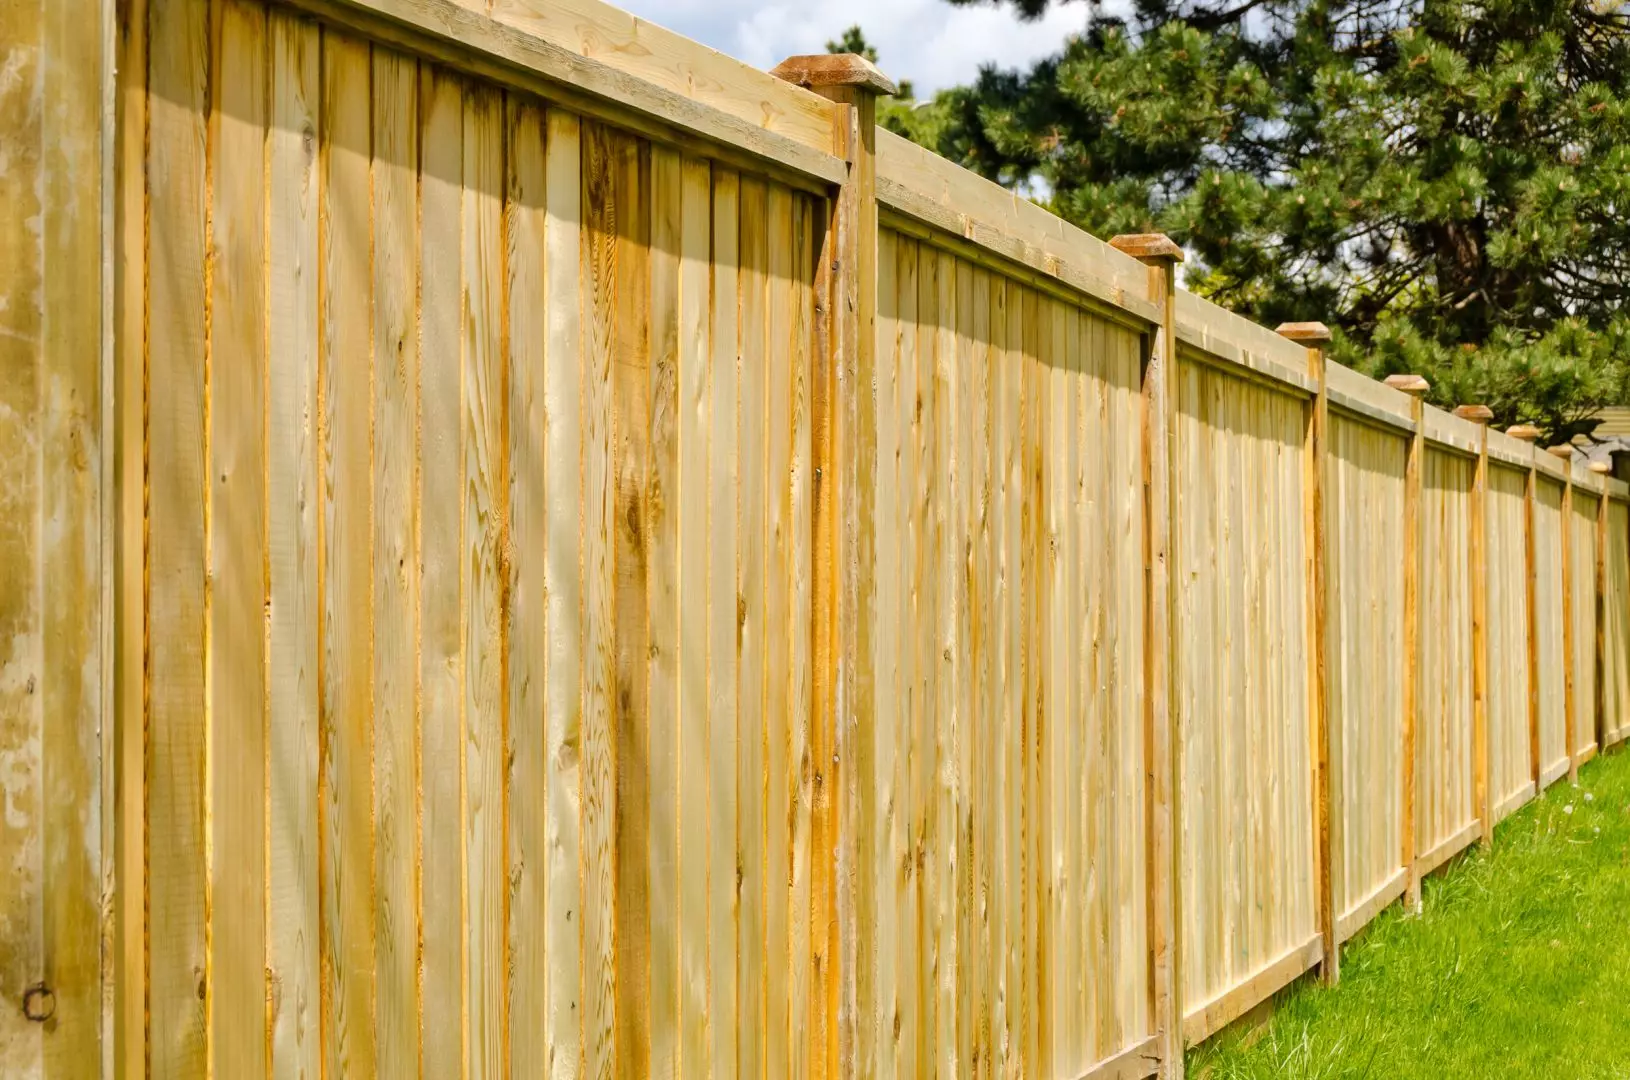 What Is The Law Regarding Garden Fences?